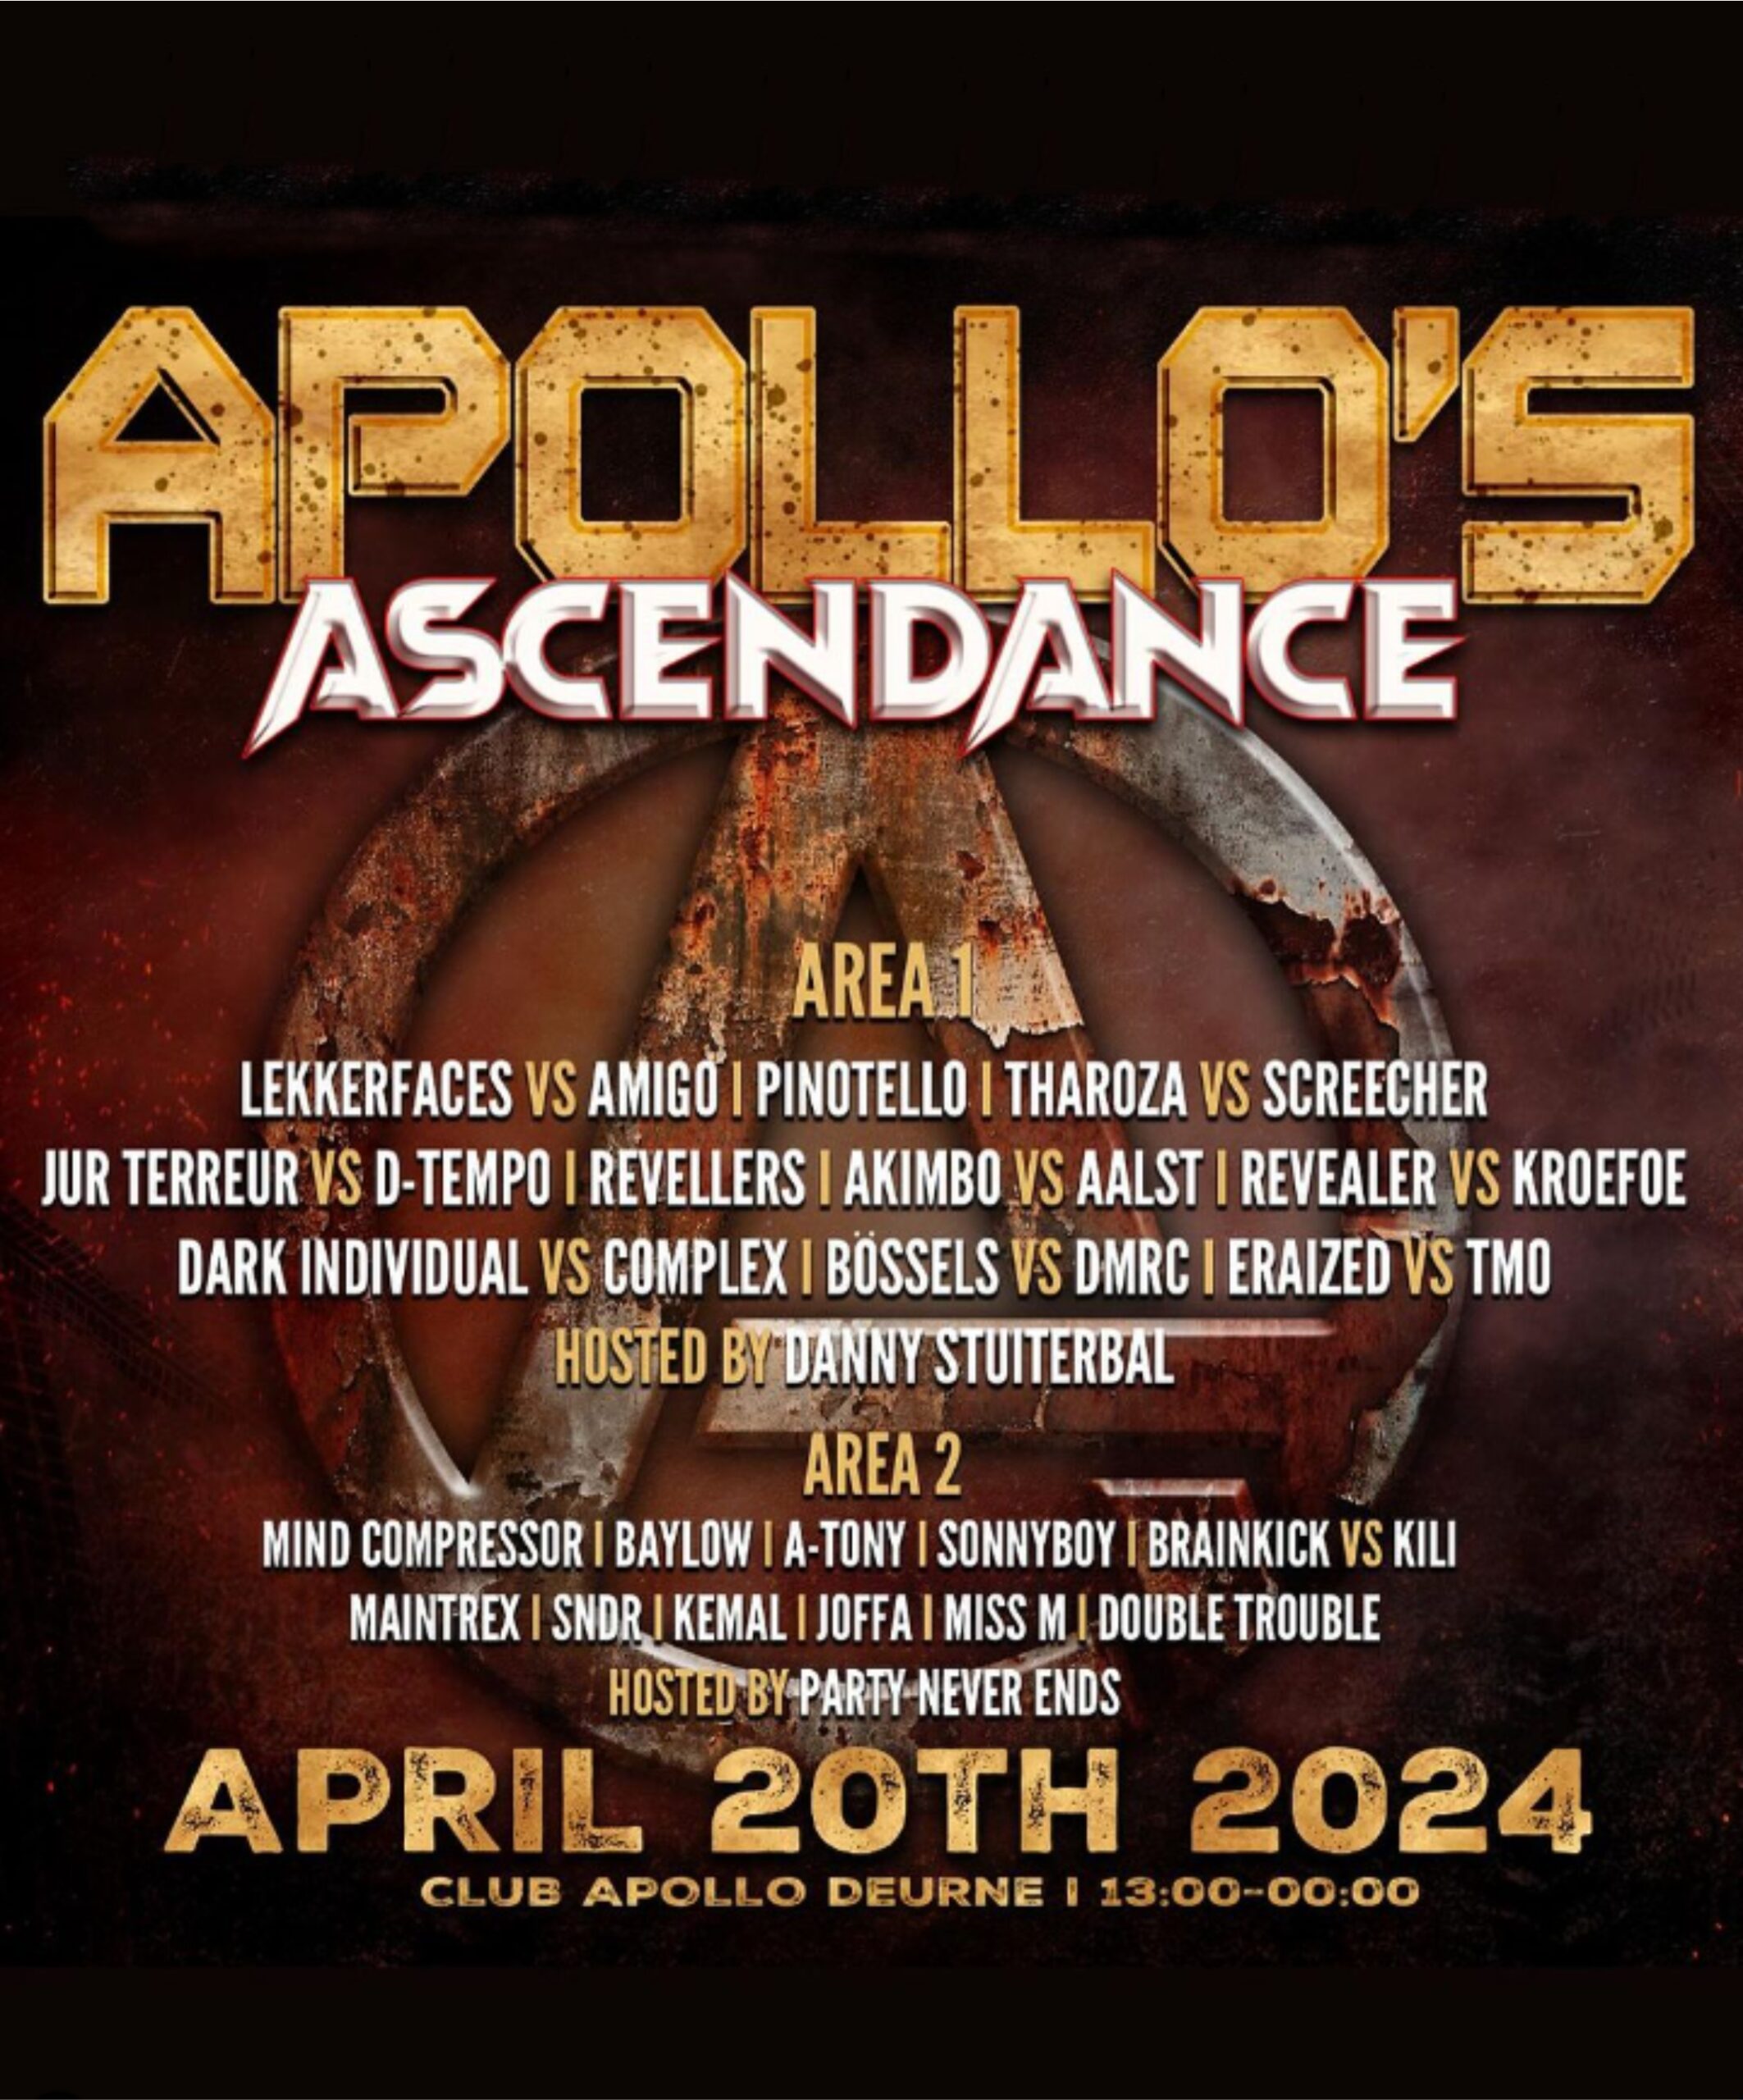 2 Area Ascendance Hardcore techno 13:00 tot 0:00 uur